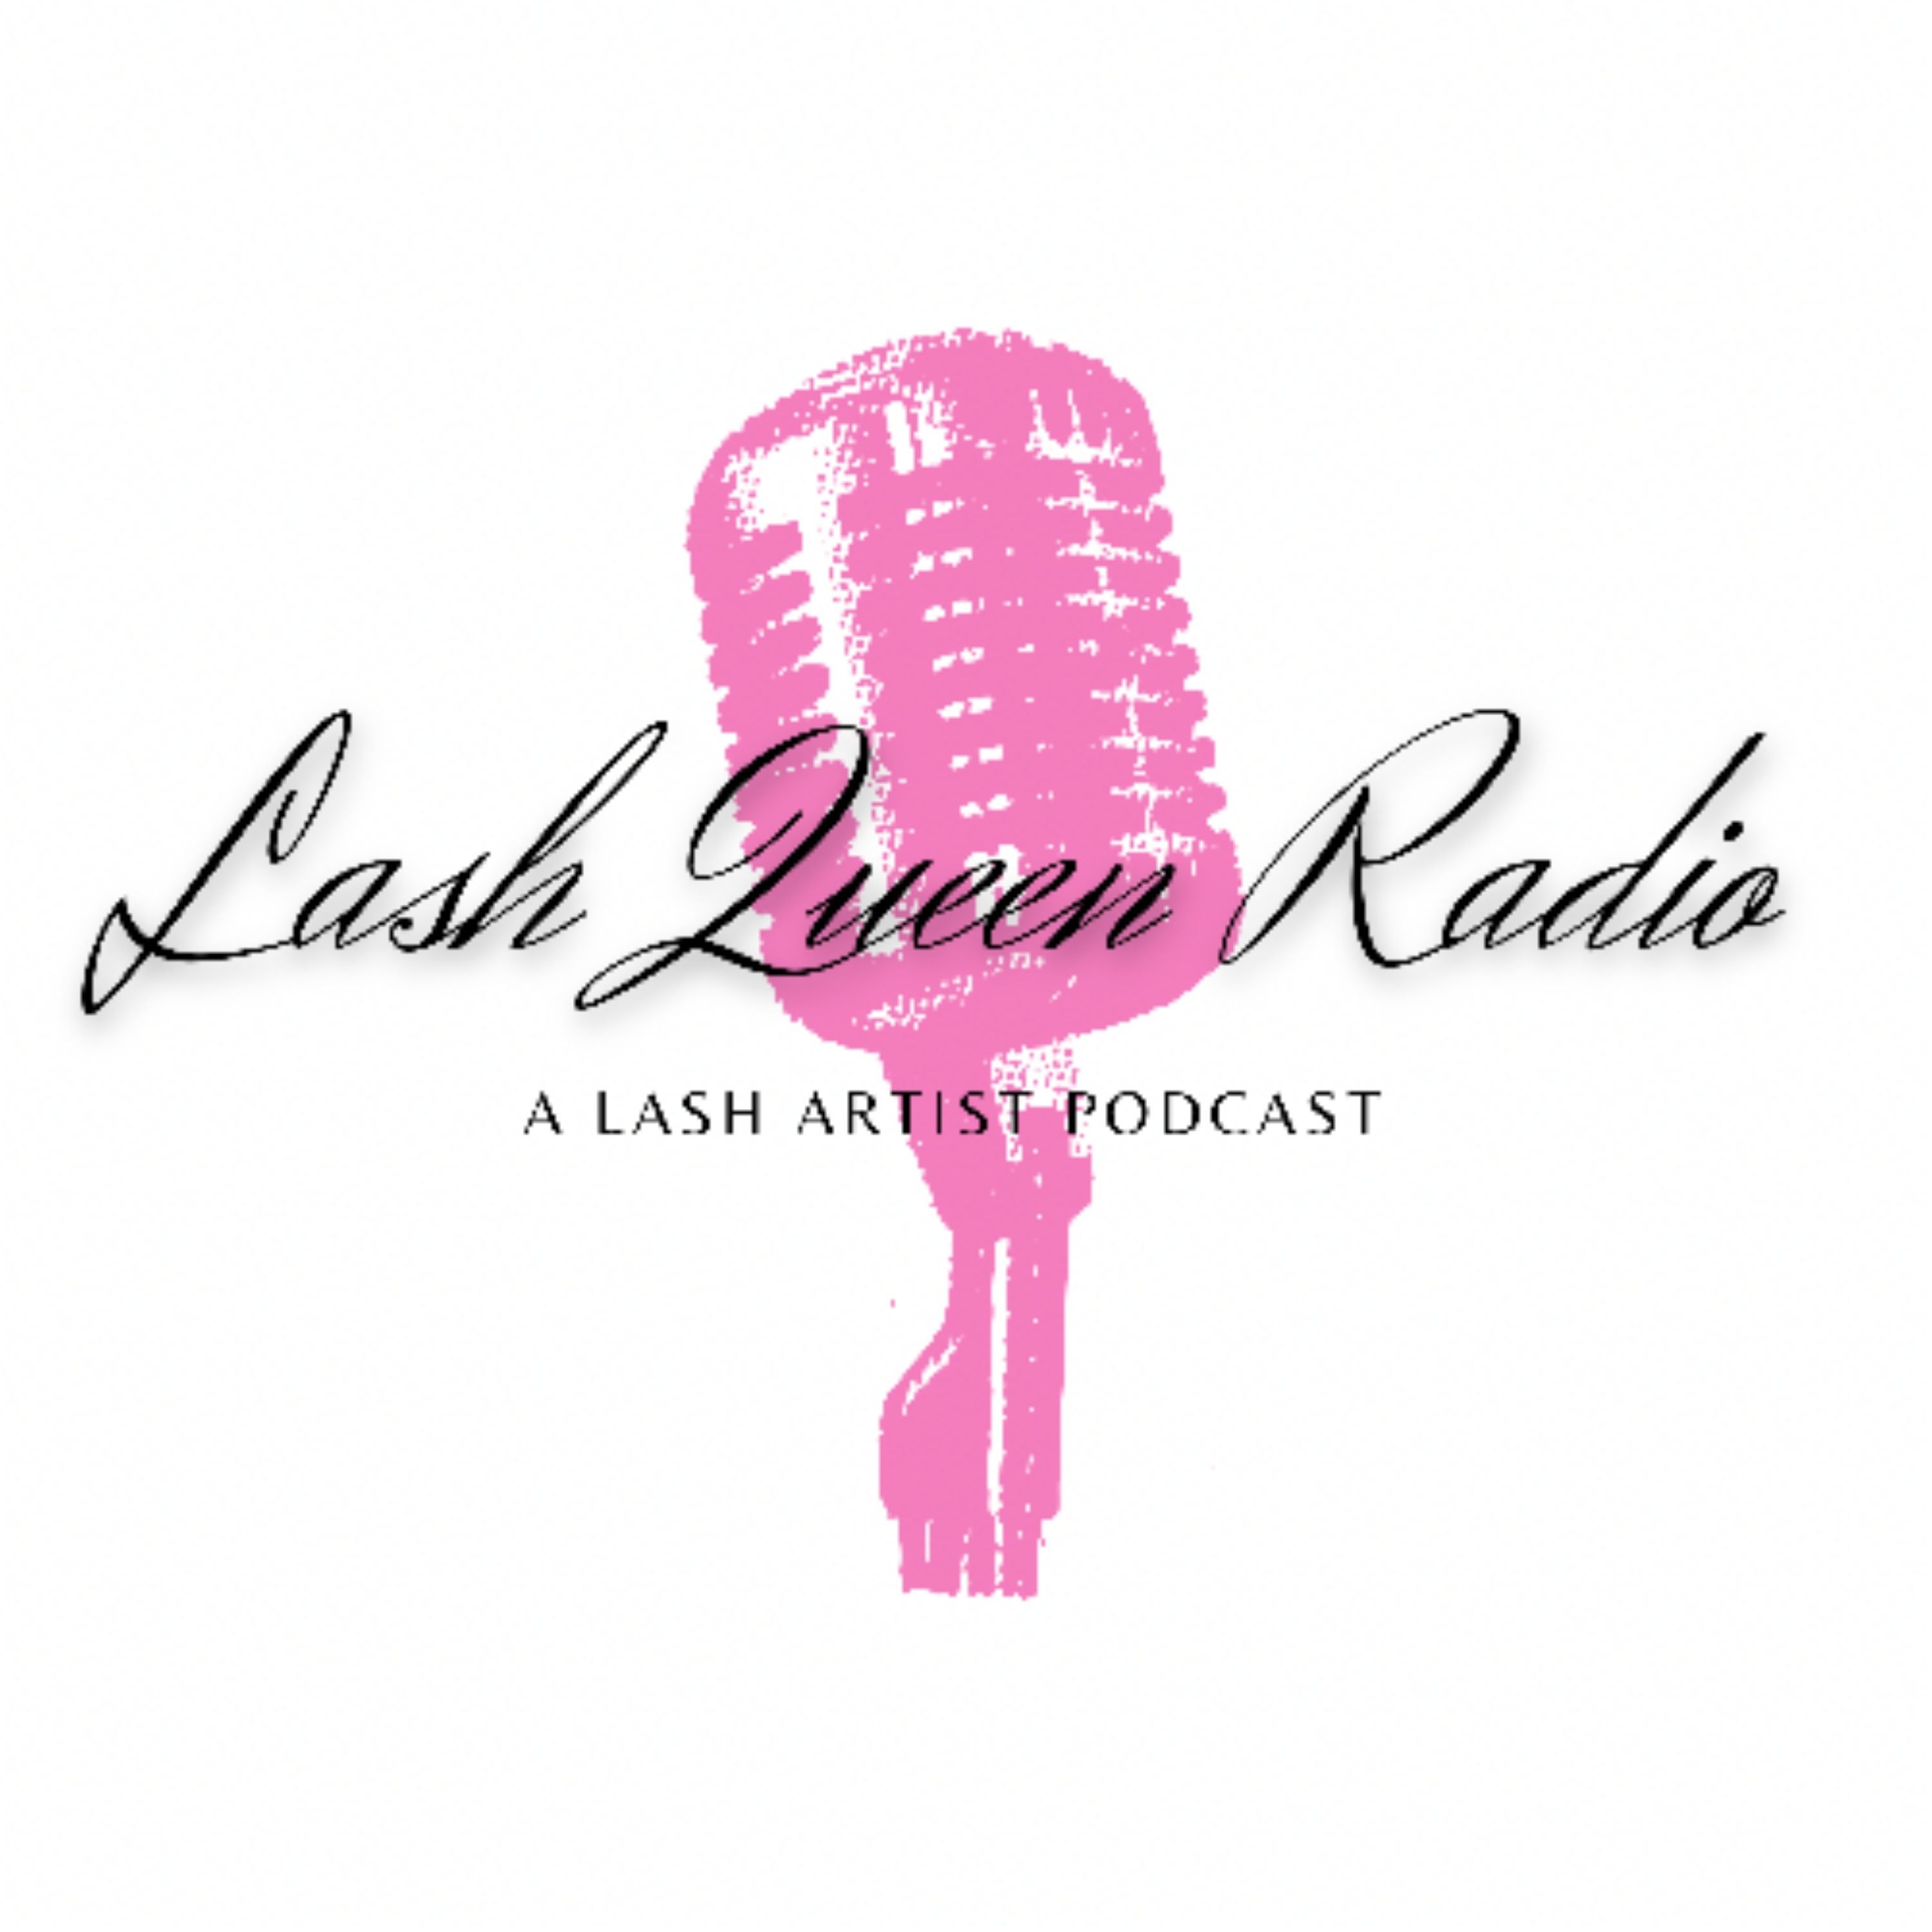 Lash Queen Radio